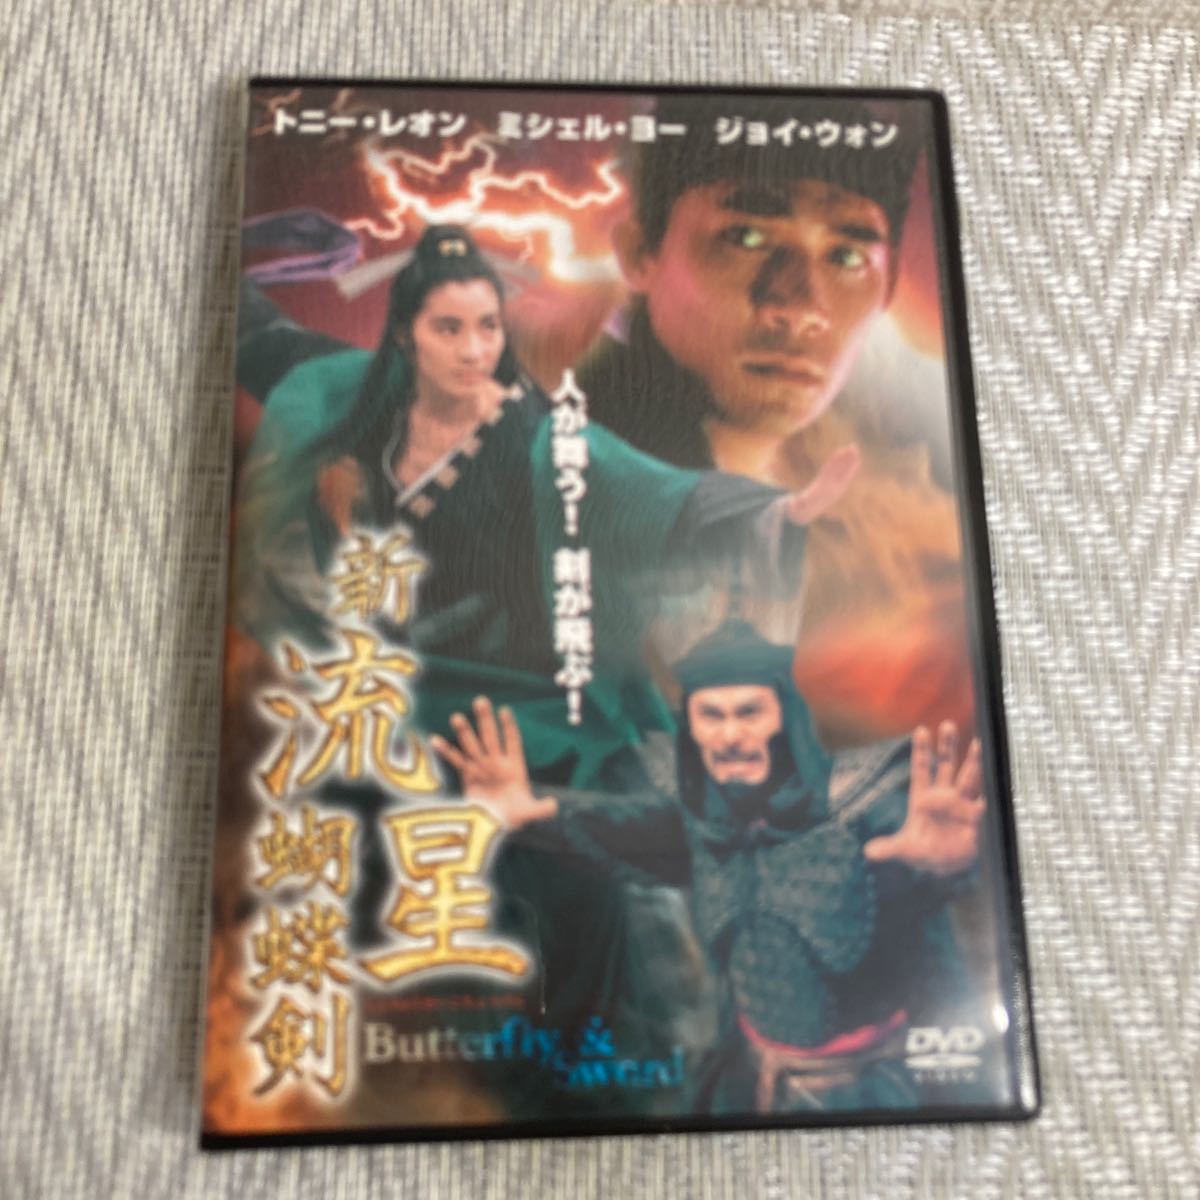 DVD/ Hong Kong * Taiwan movie / Tony * Leon / Michel *yo-/ Joy *won/ movie DVD/ new . star . butterfly ./ cell version 